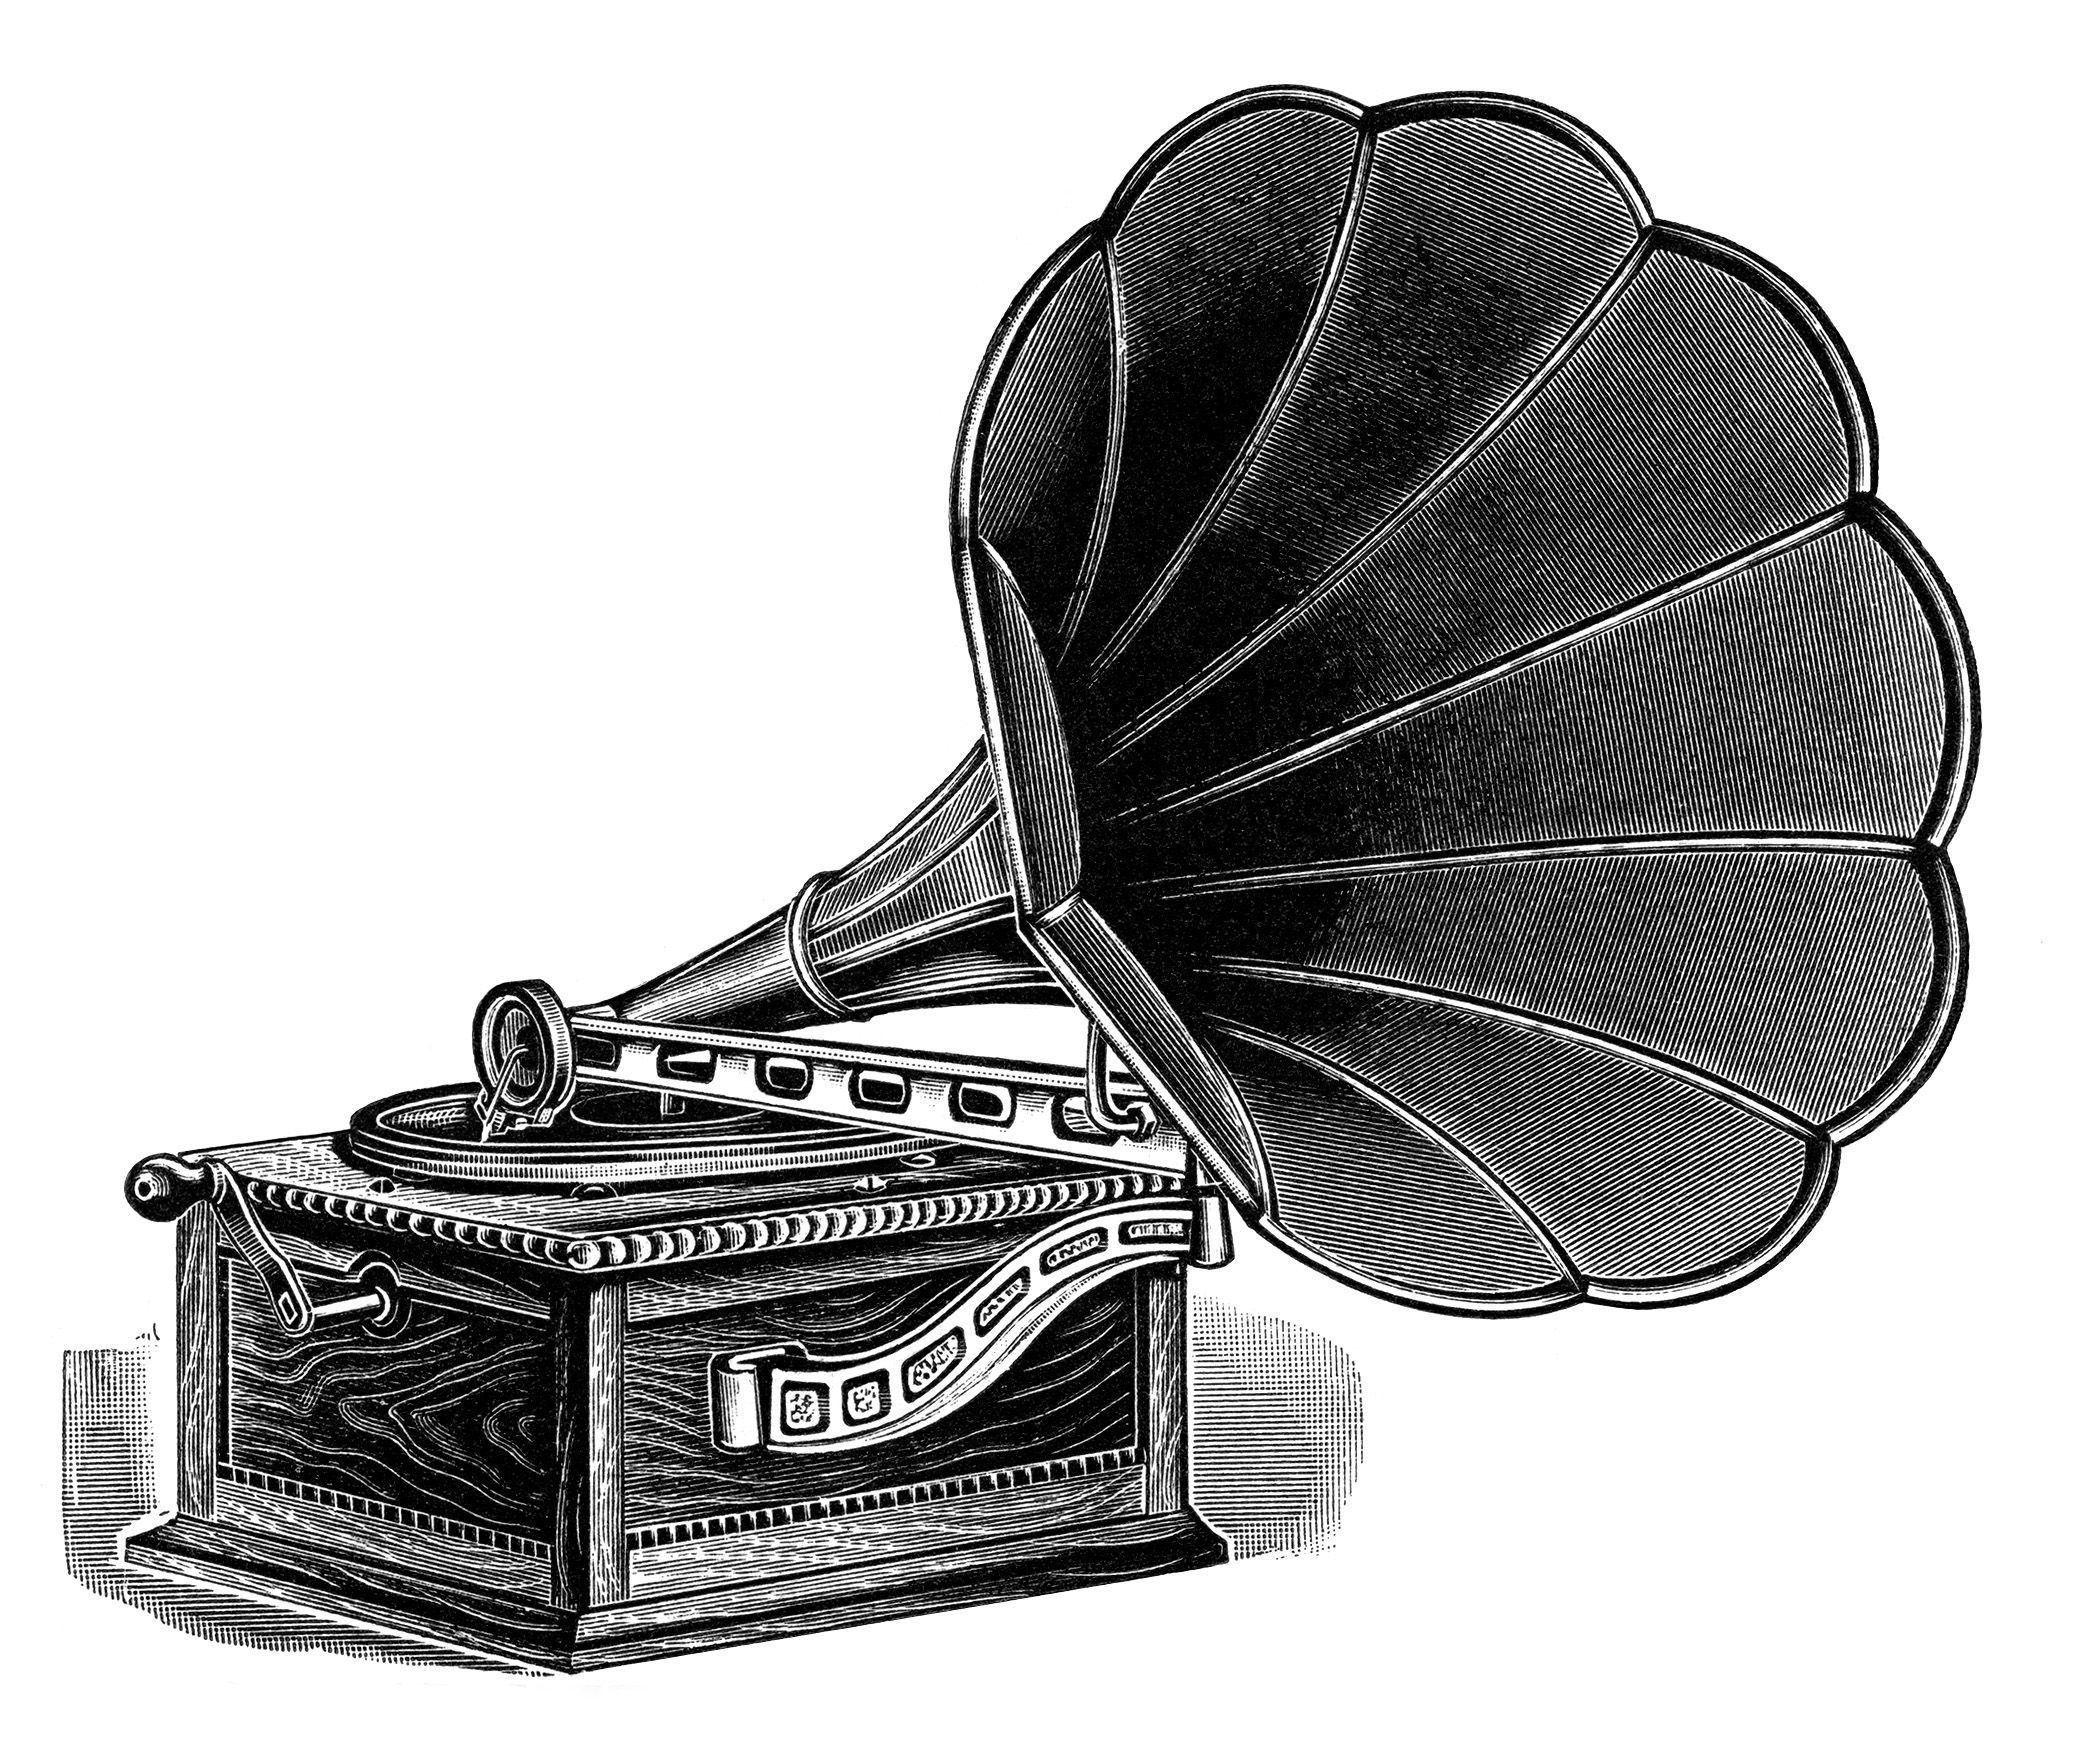 Phonograph talking machine.